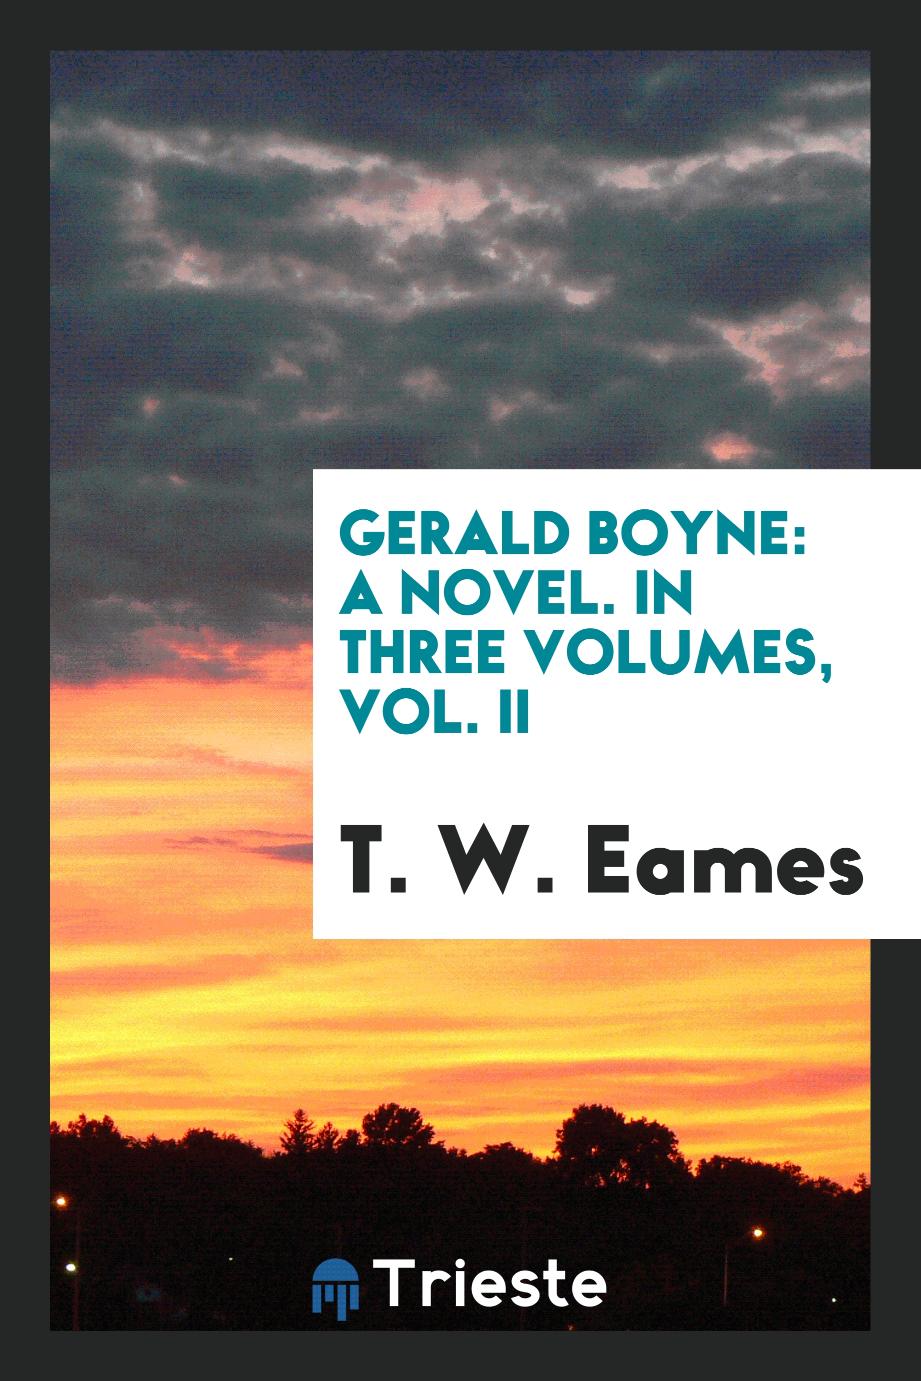 Gerald Boyne: A Novel. In Three Volumes, Vol. II